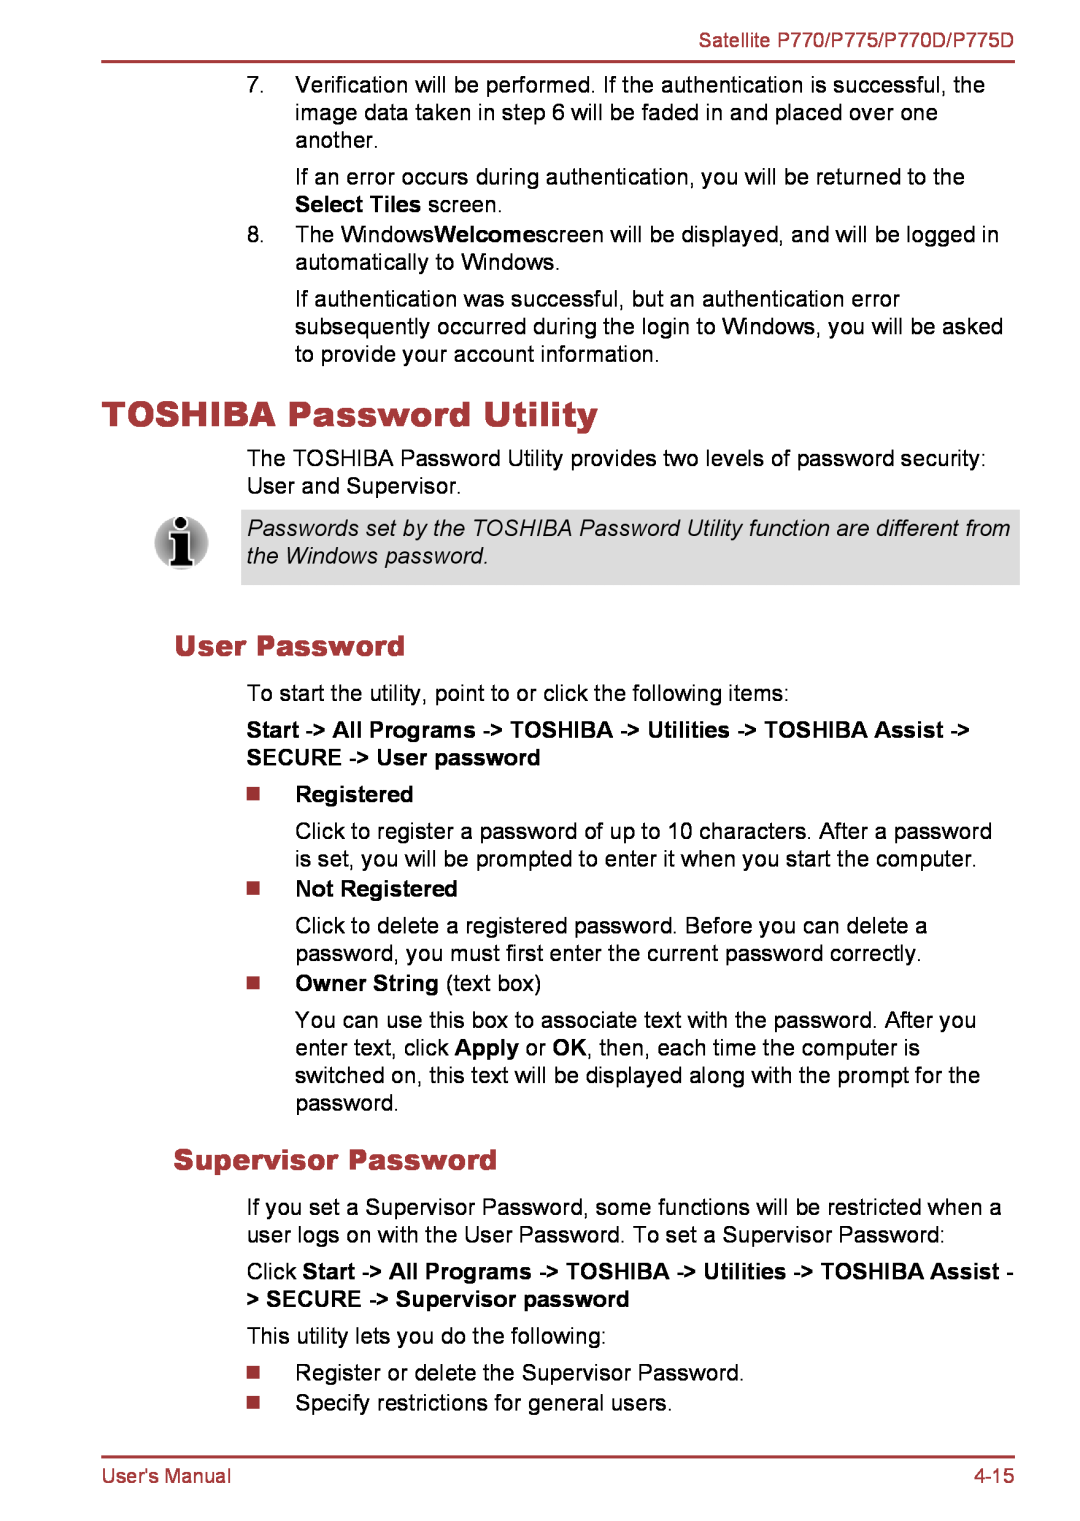 Toshiba P770 TOSHIBA Password Utility, User Password, Supervisor Password, Not Registered, Owner String text box 